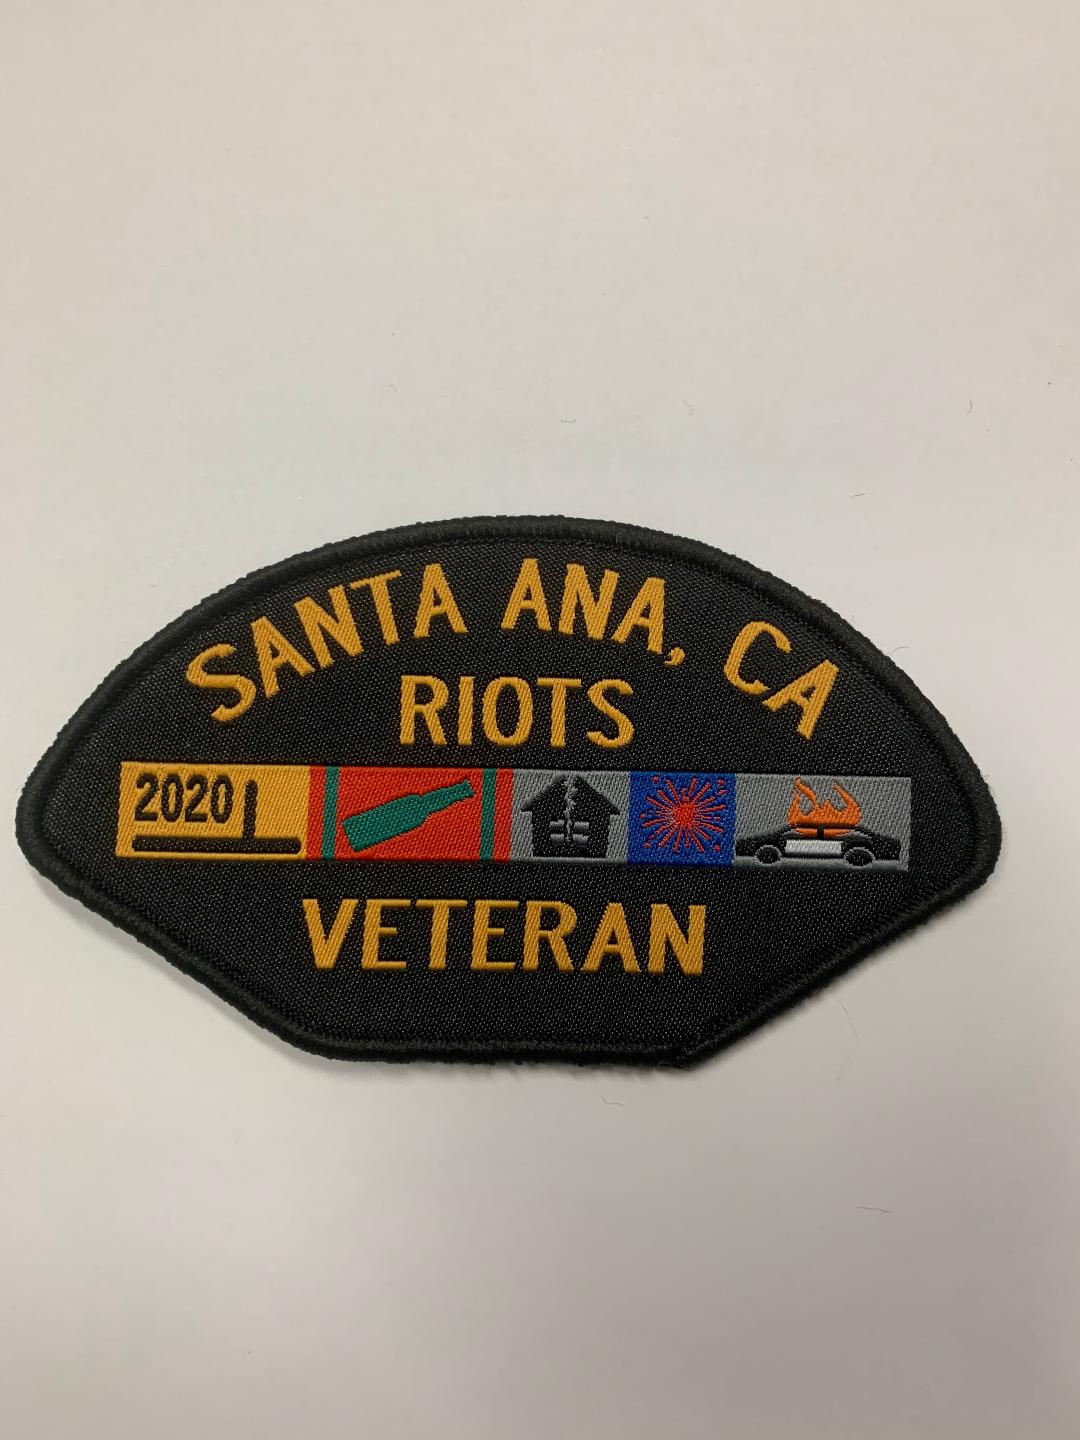 Veteran Riots Patch (Santa Ana)